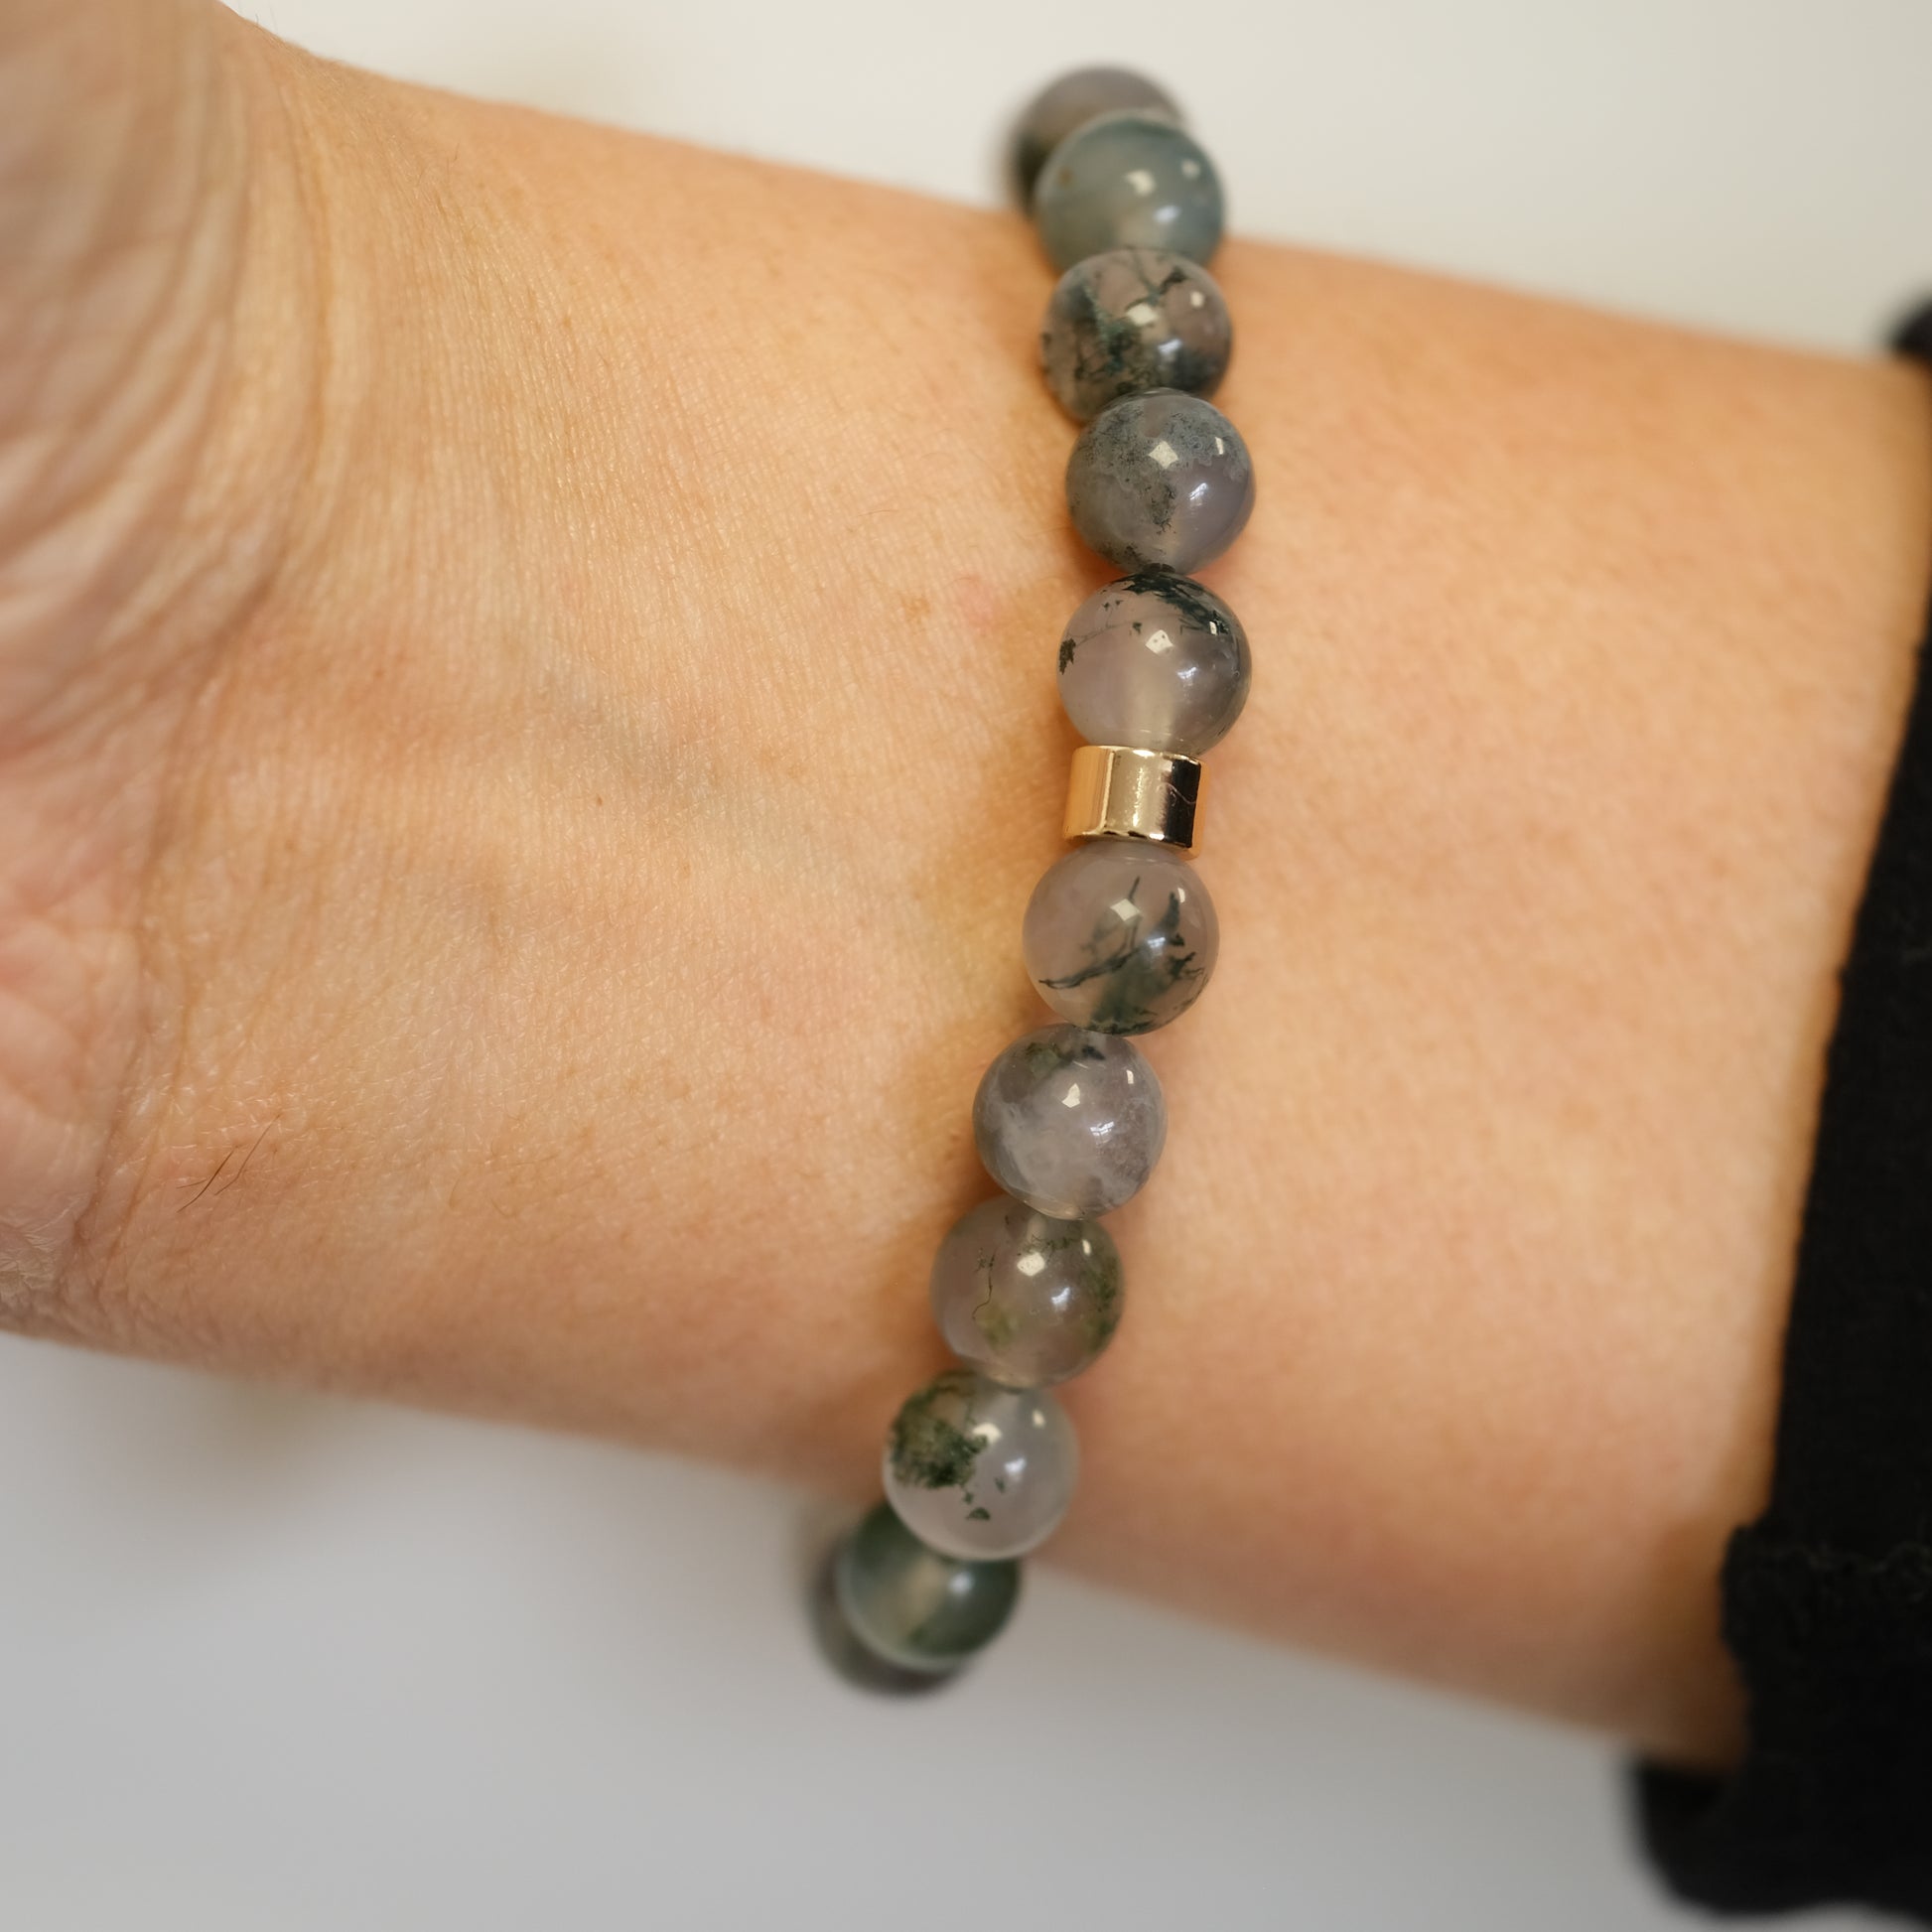 A moss agate gemstone bracelet worn on a model's wrist from behind